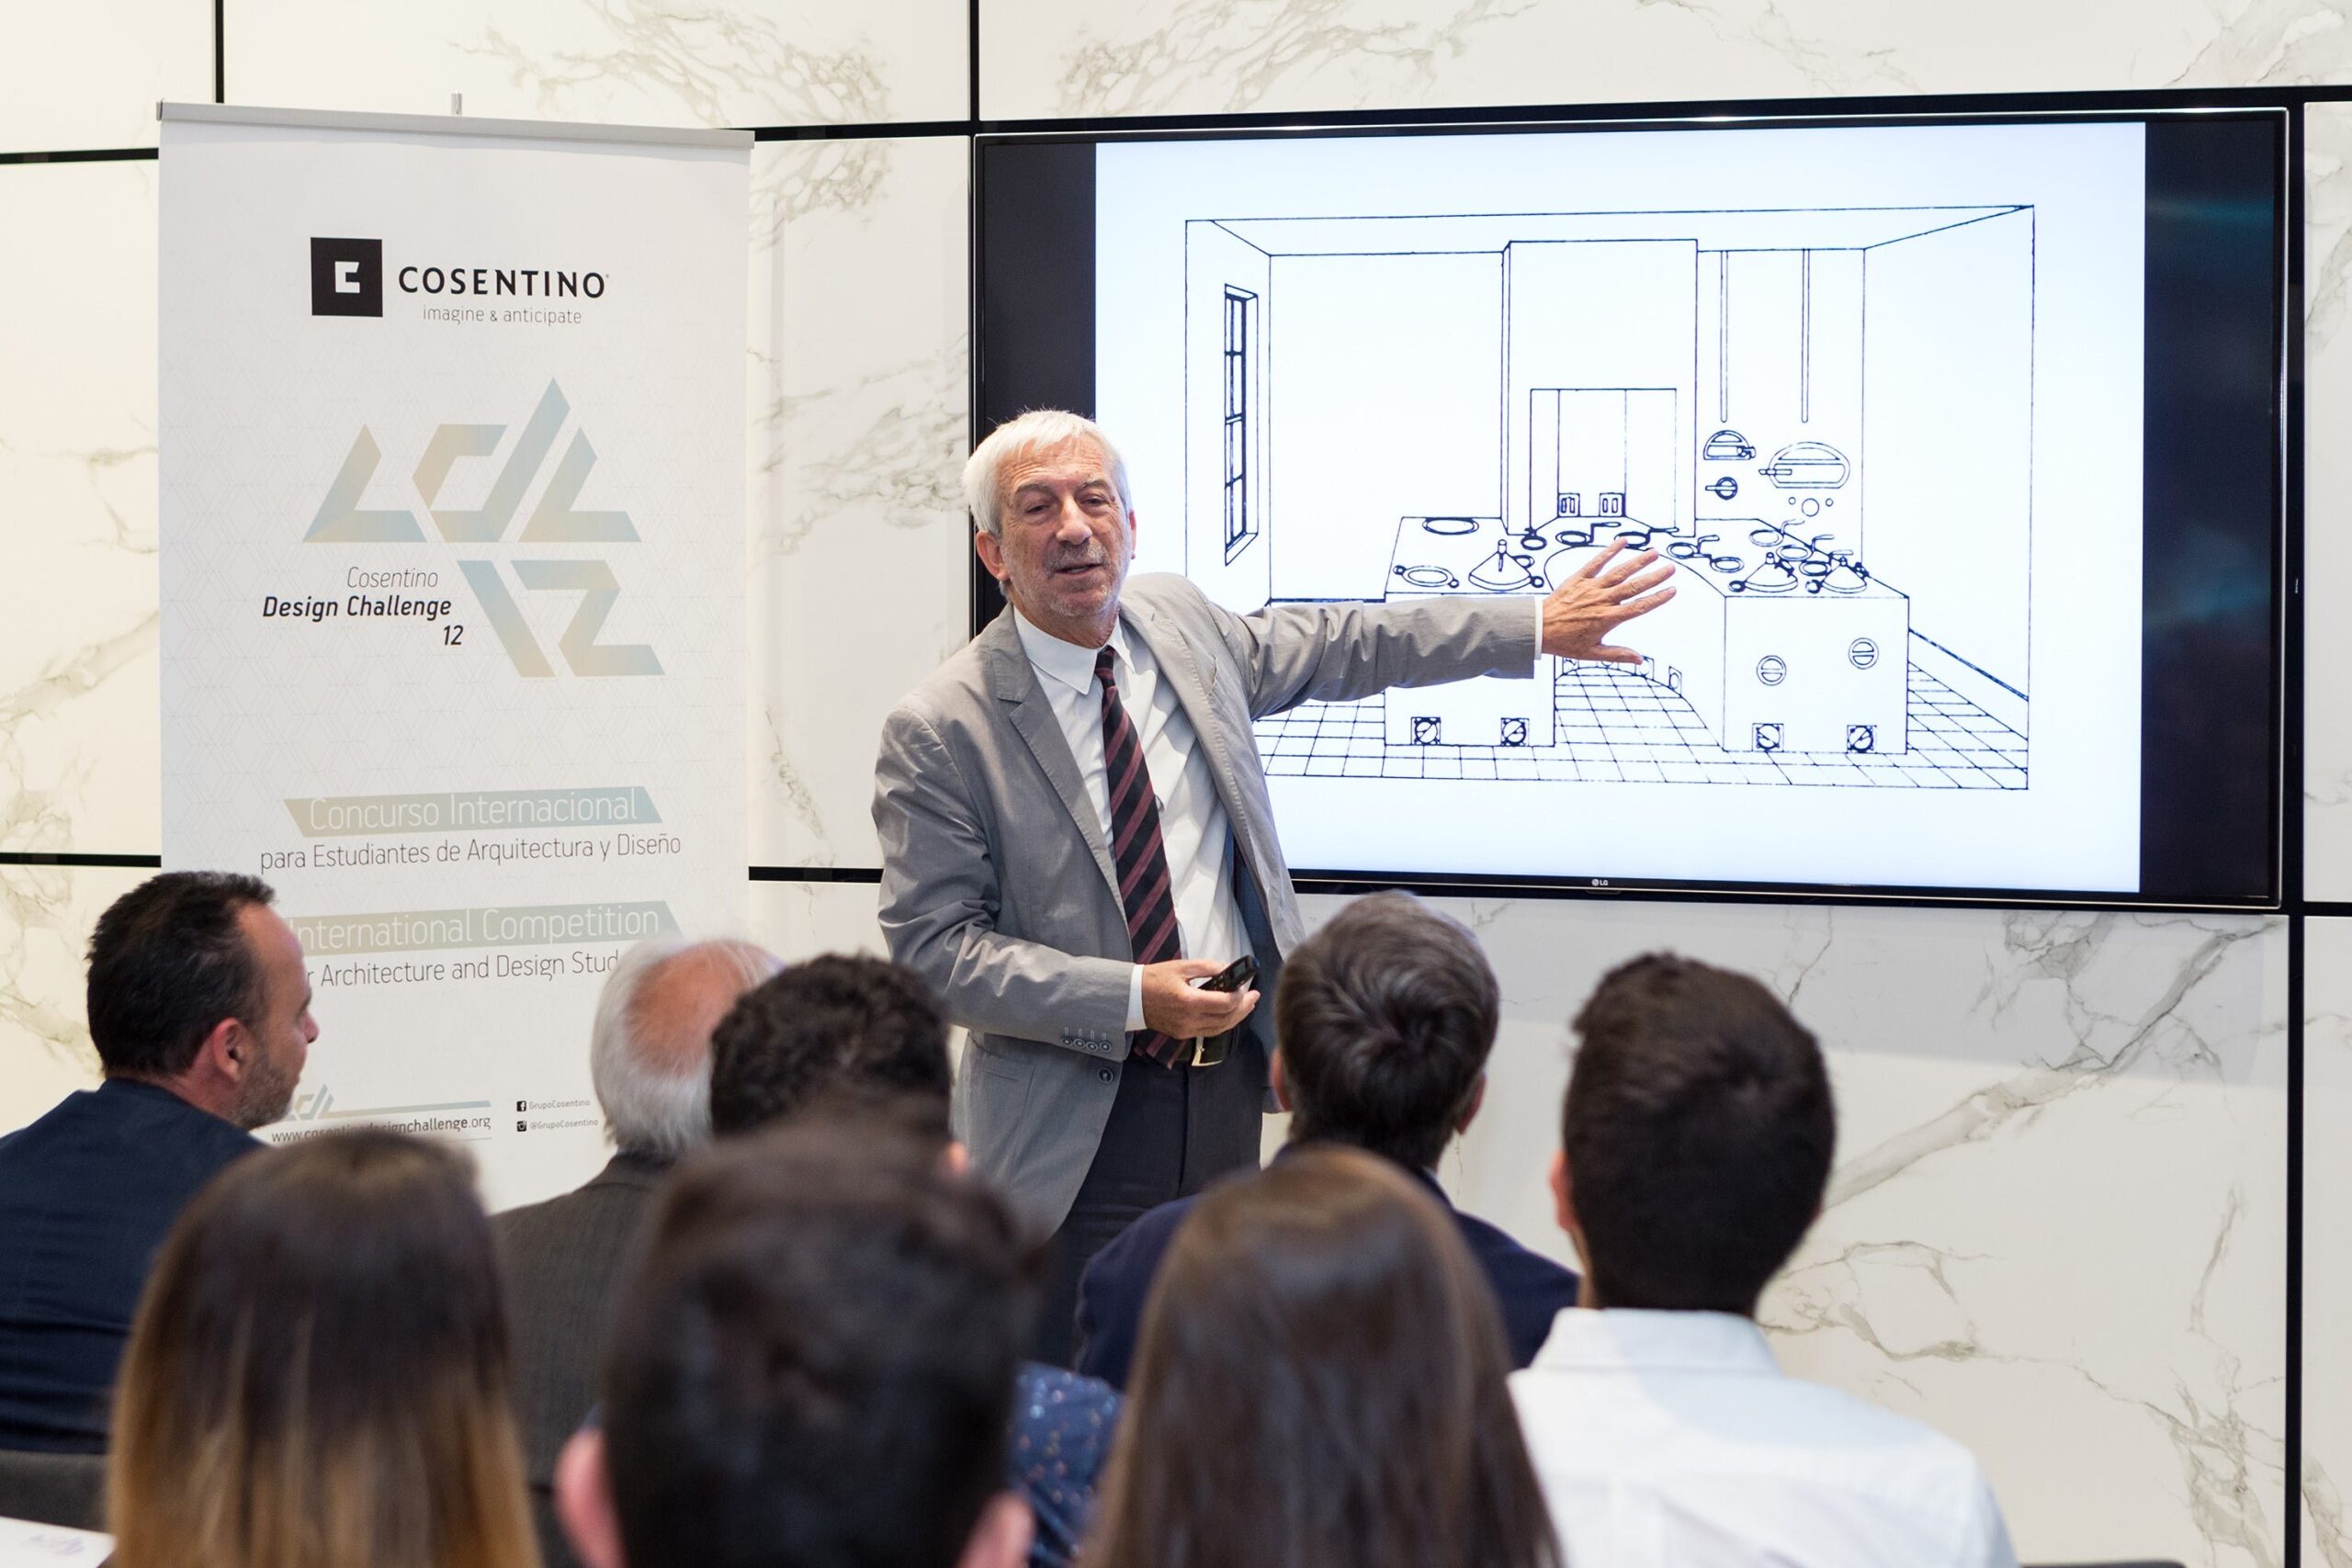 Image of Luis Fernandez Galiano Ponente invitado CDC12 3 scaled in The Cosentino Design Challenge has now reached its 12th year - Cosentino